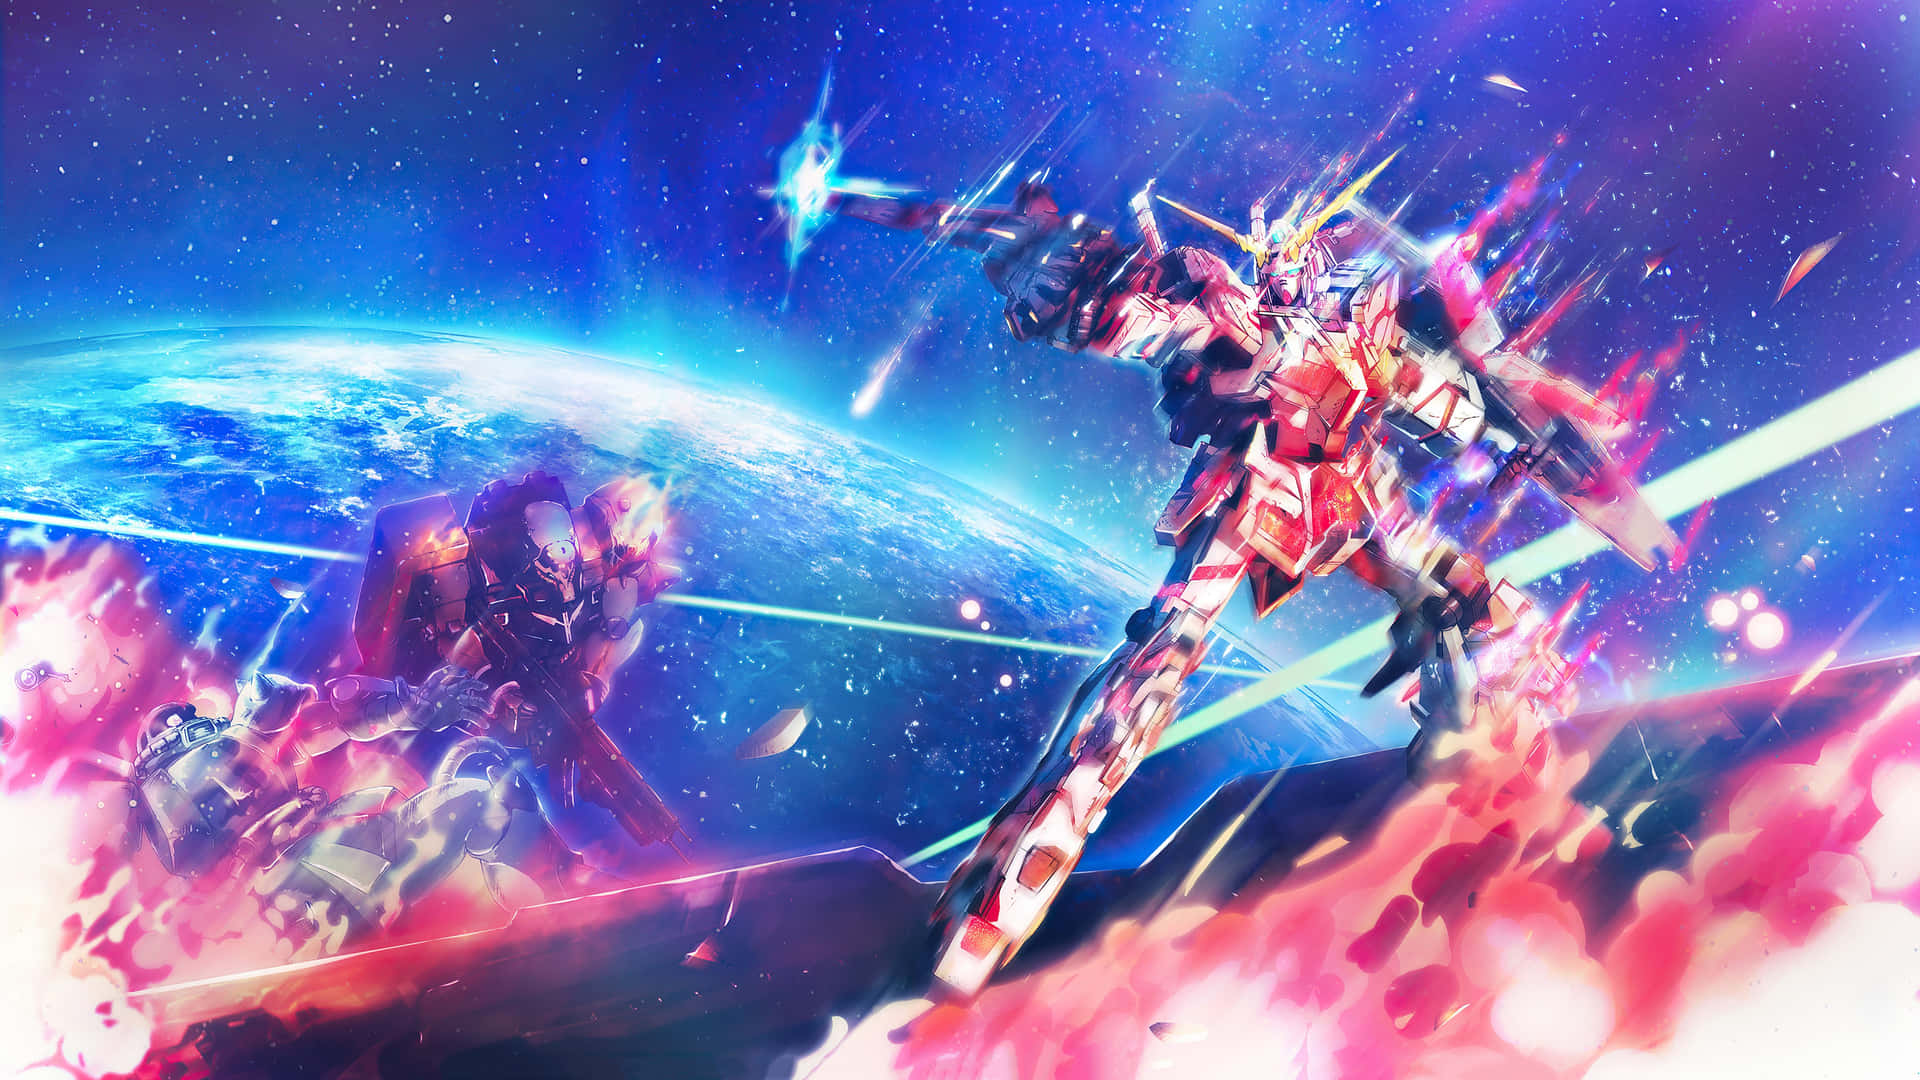 Experience Mobile Suit Gundam in ultra HD 4K. Wallpaper